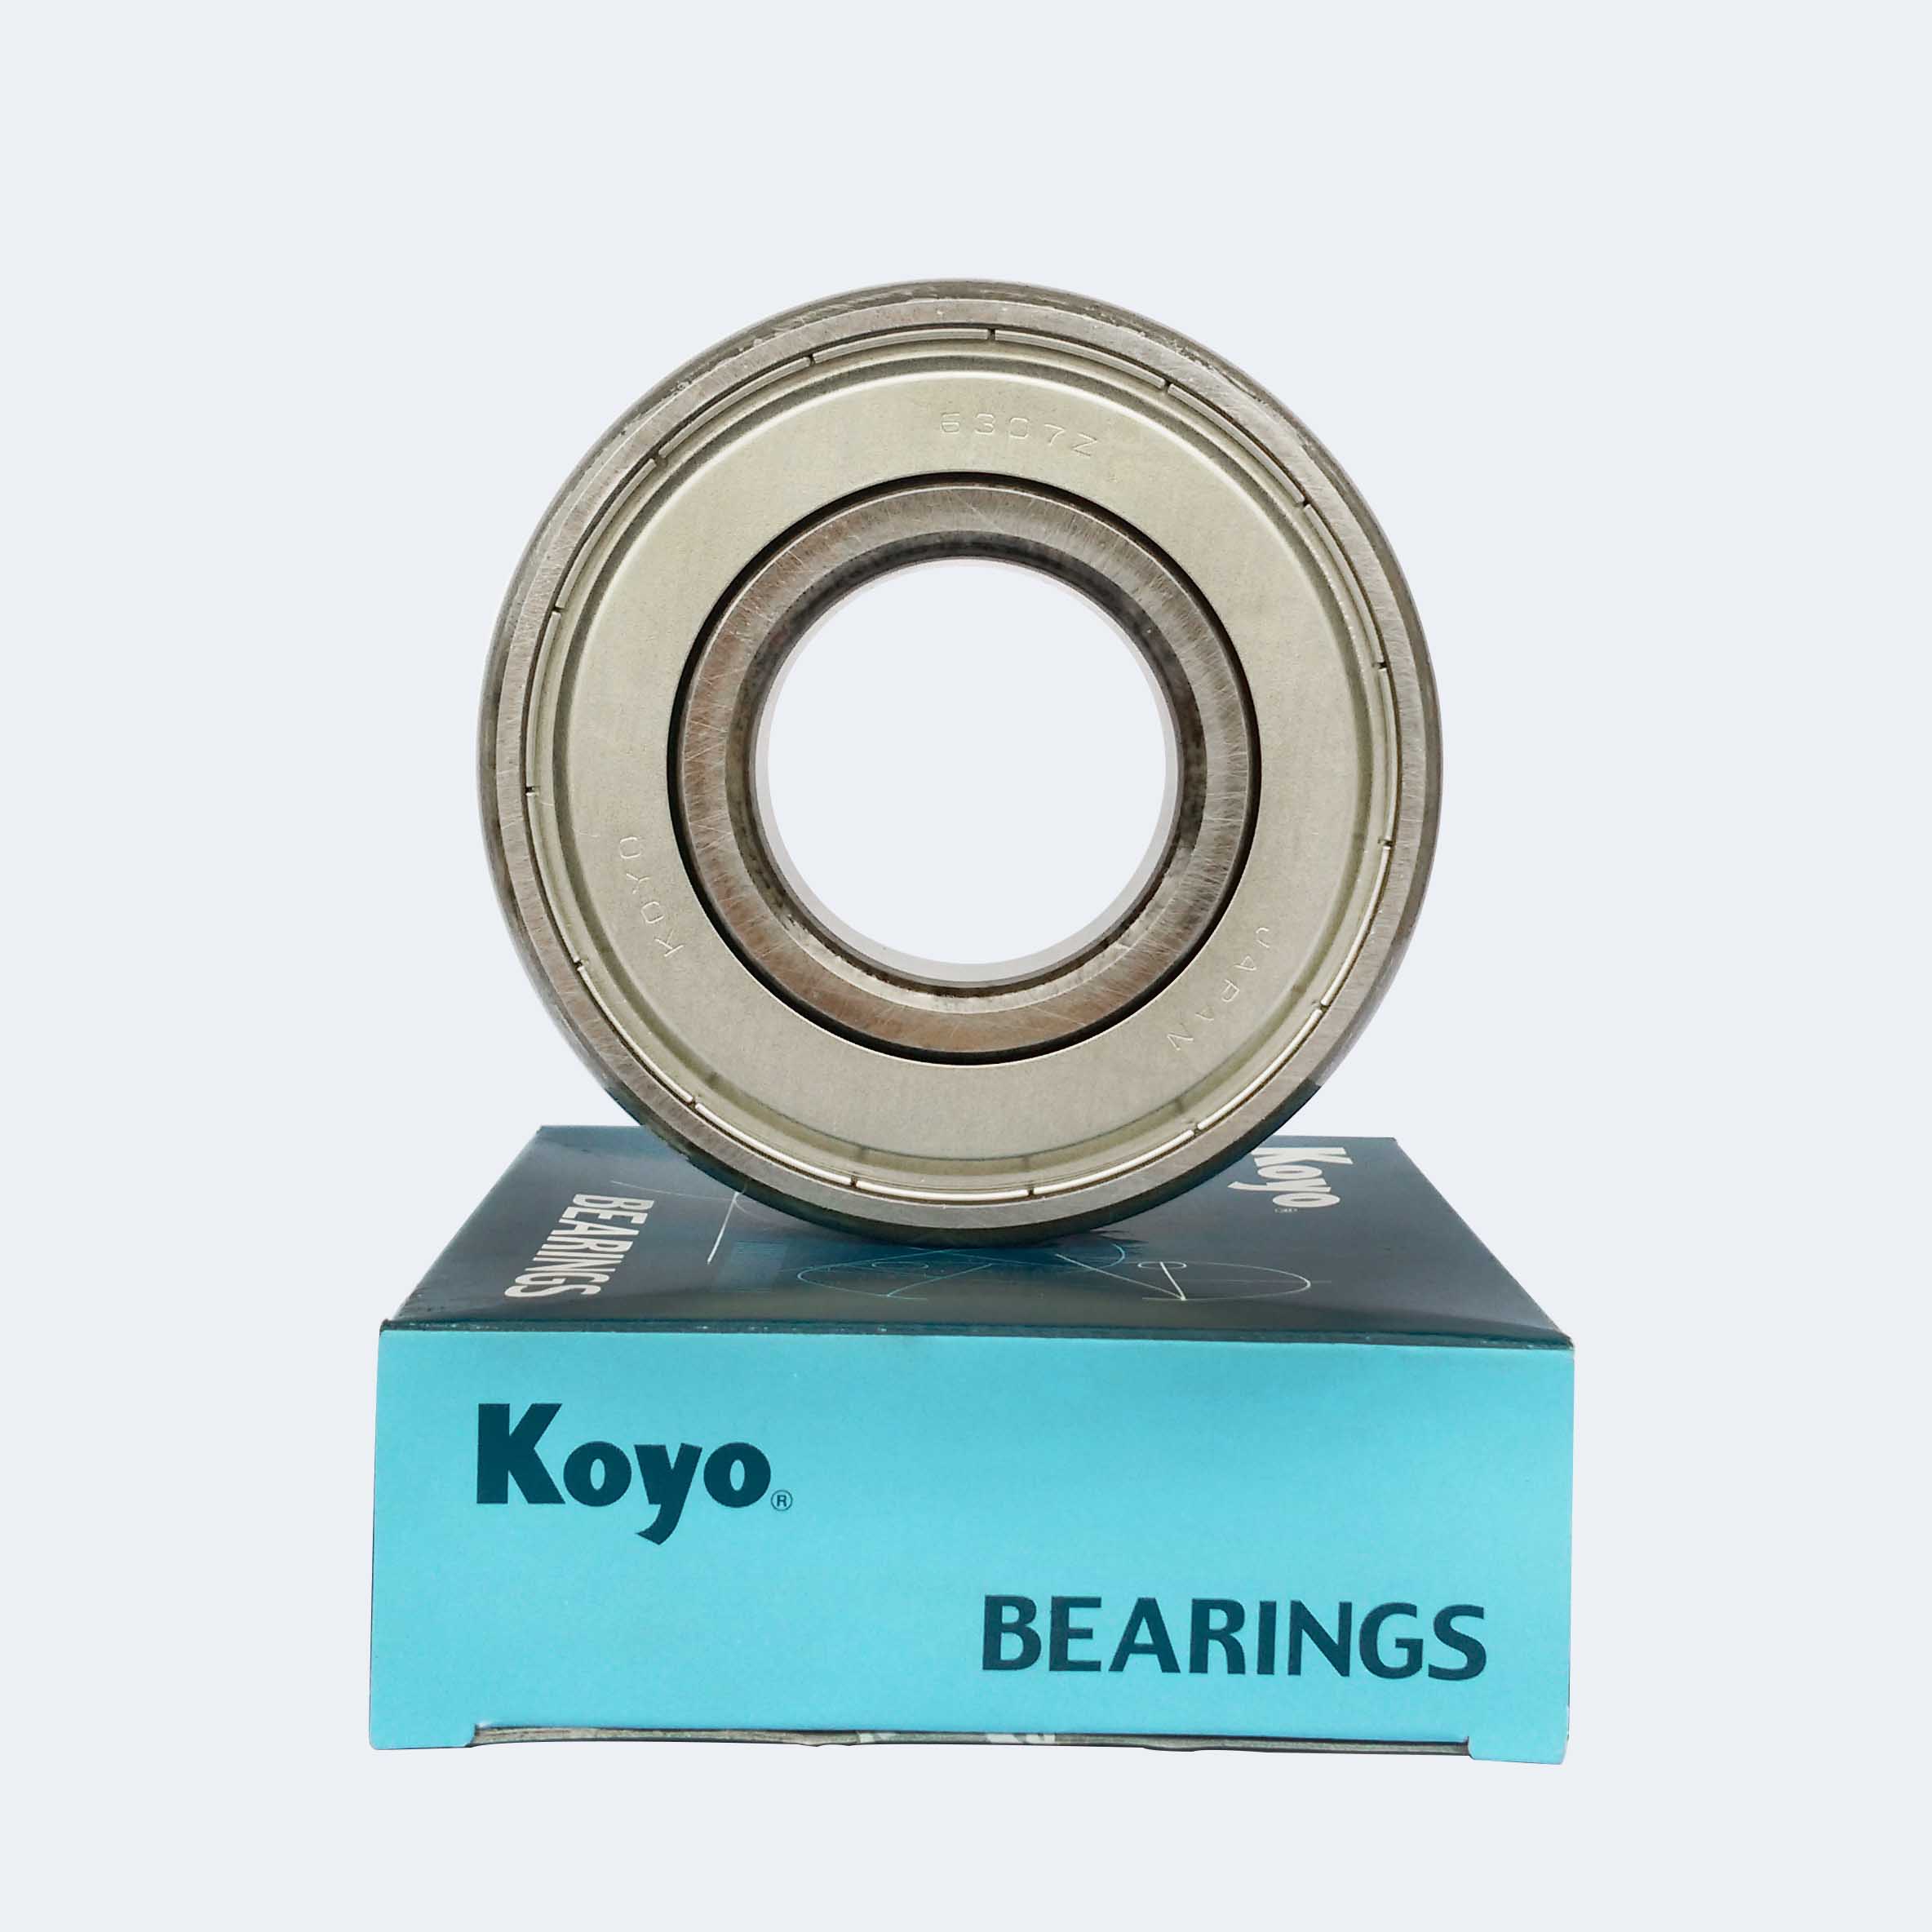 KOYO圓柱滾子軸承,NU1036型號參數,原裝進口軸承銷售